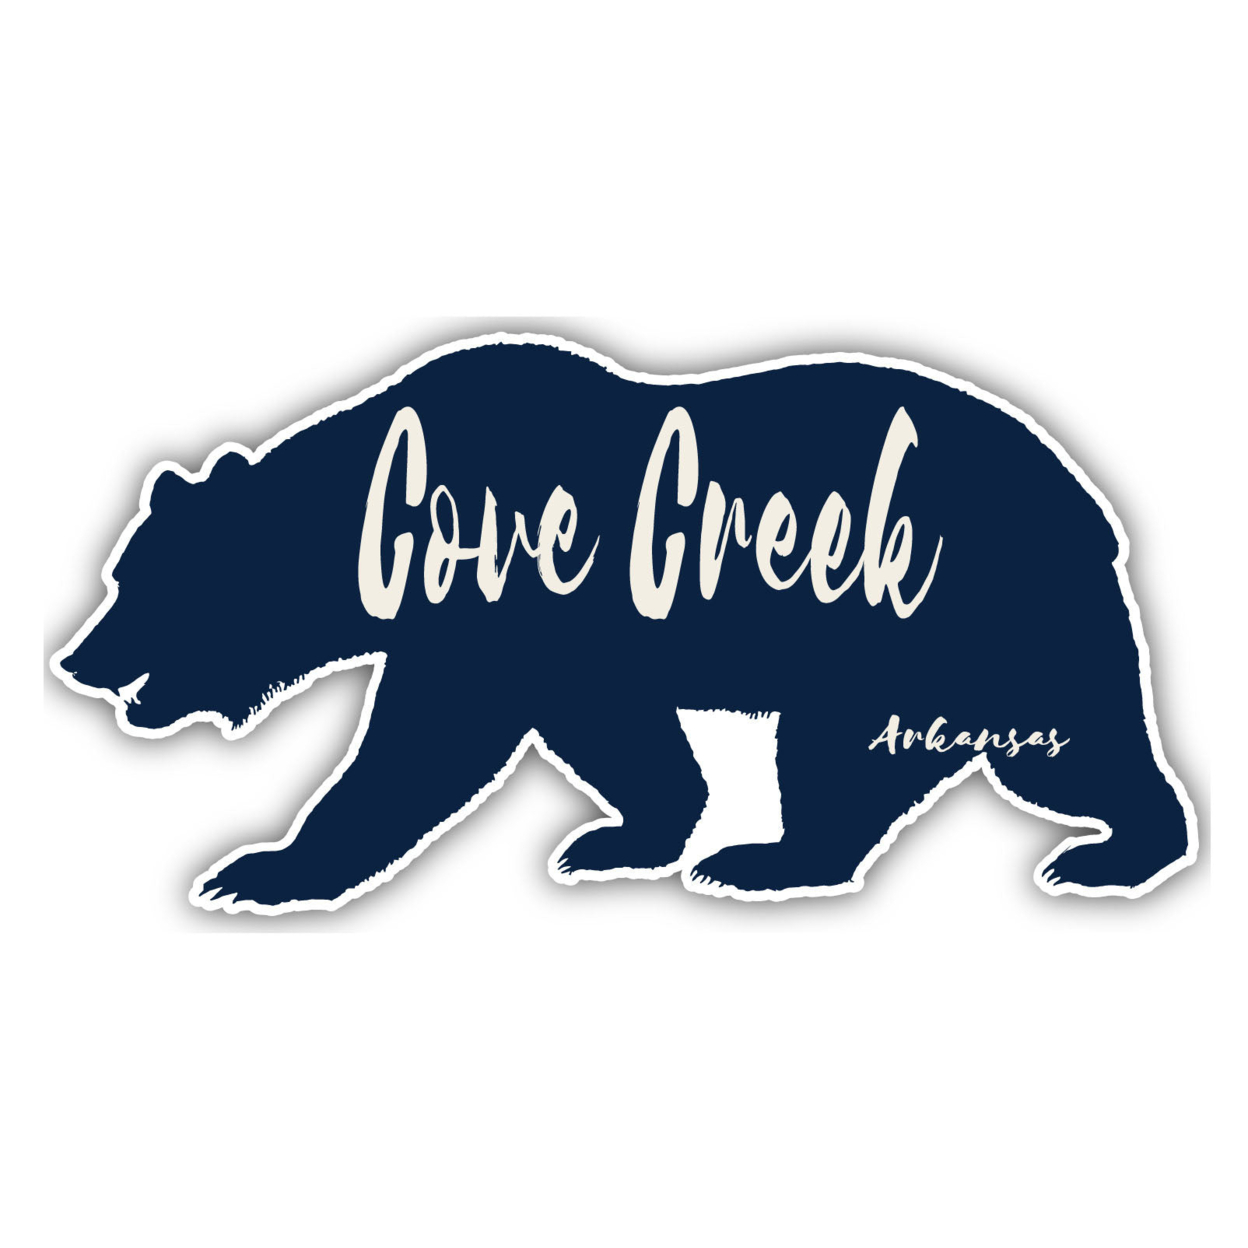 Cove Creek Arkansas Souvenir Decorative Stickers (Choose Theme And Size) - 4-Pack, 2-Inch, Bear